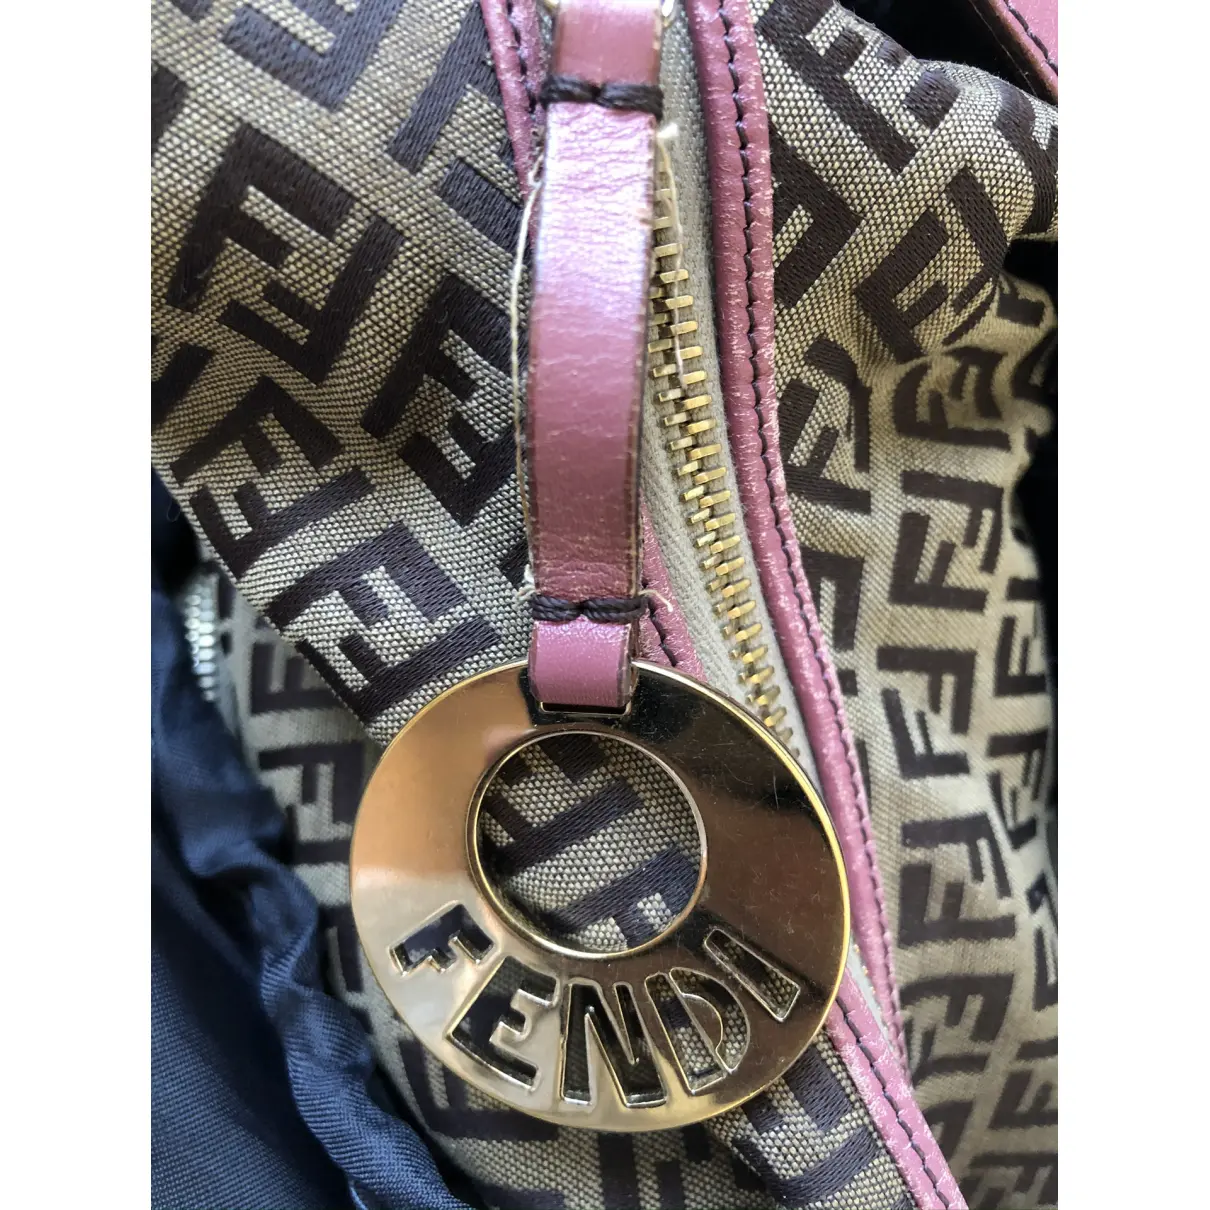 Cloth handbag Fendi